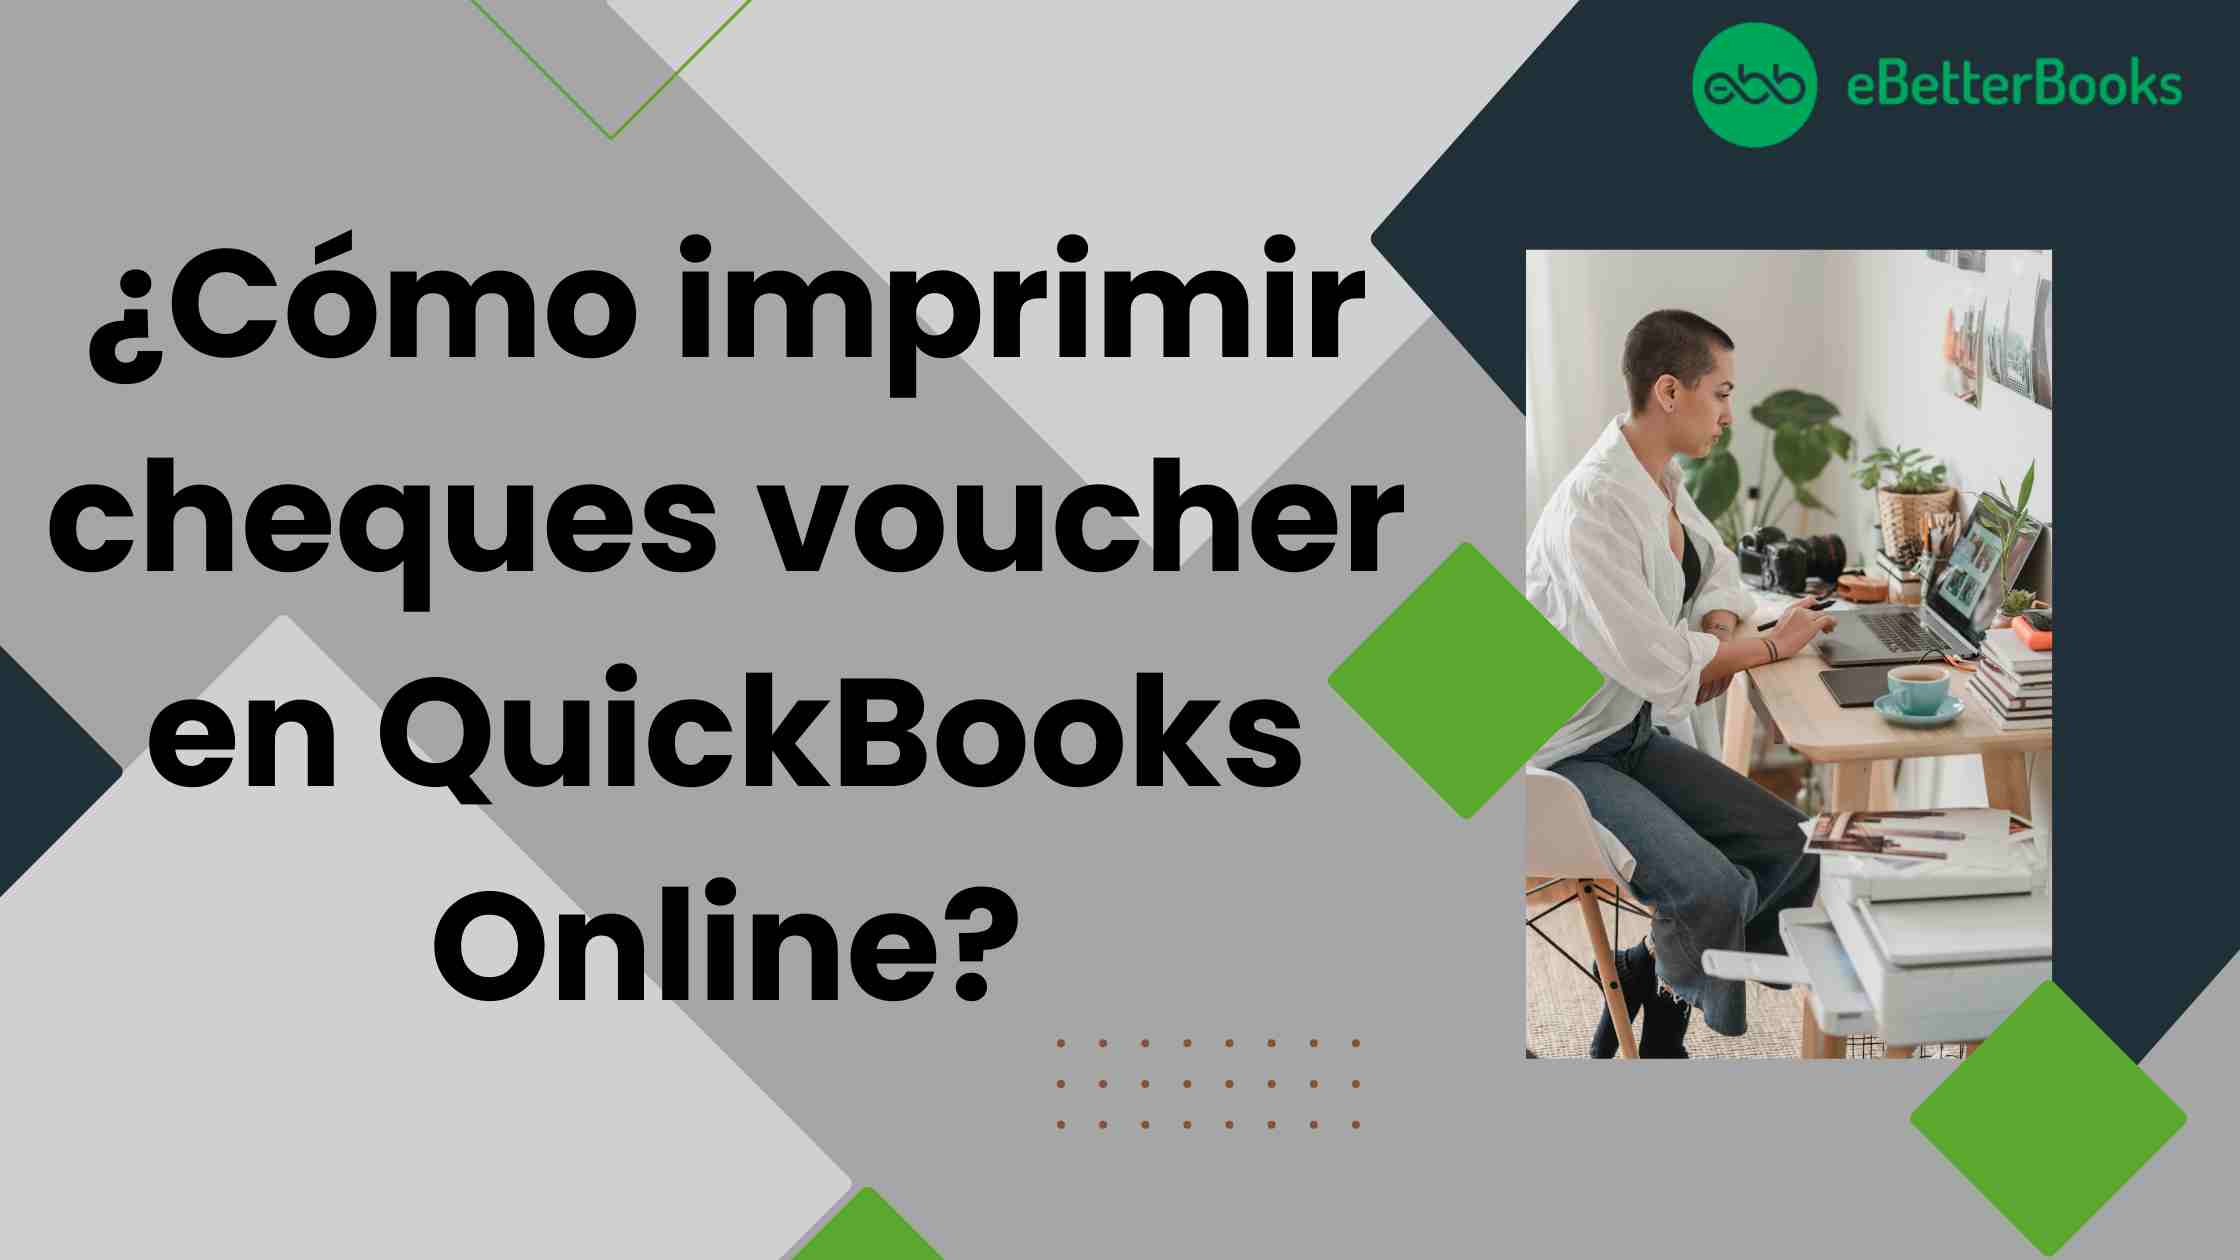 ¿Cómo imprimir cheques voucher en QuickBooks Online?